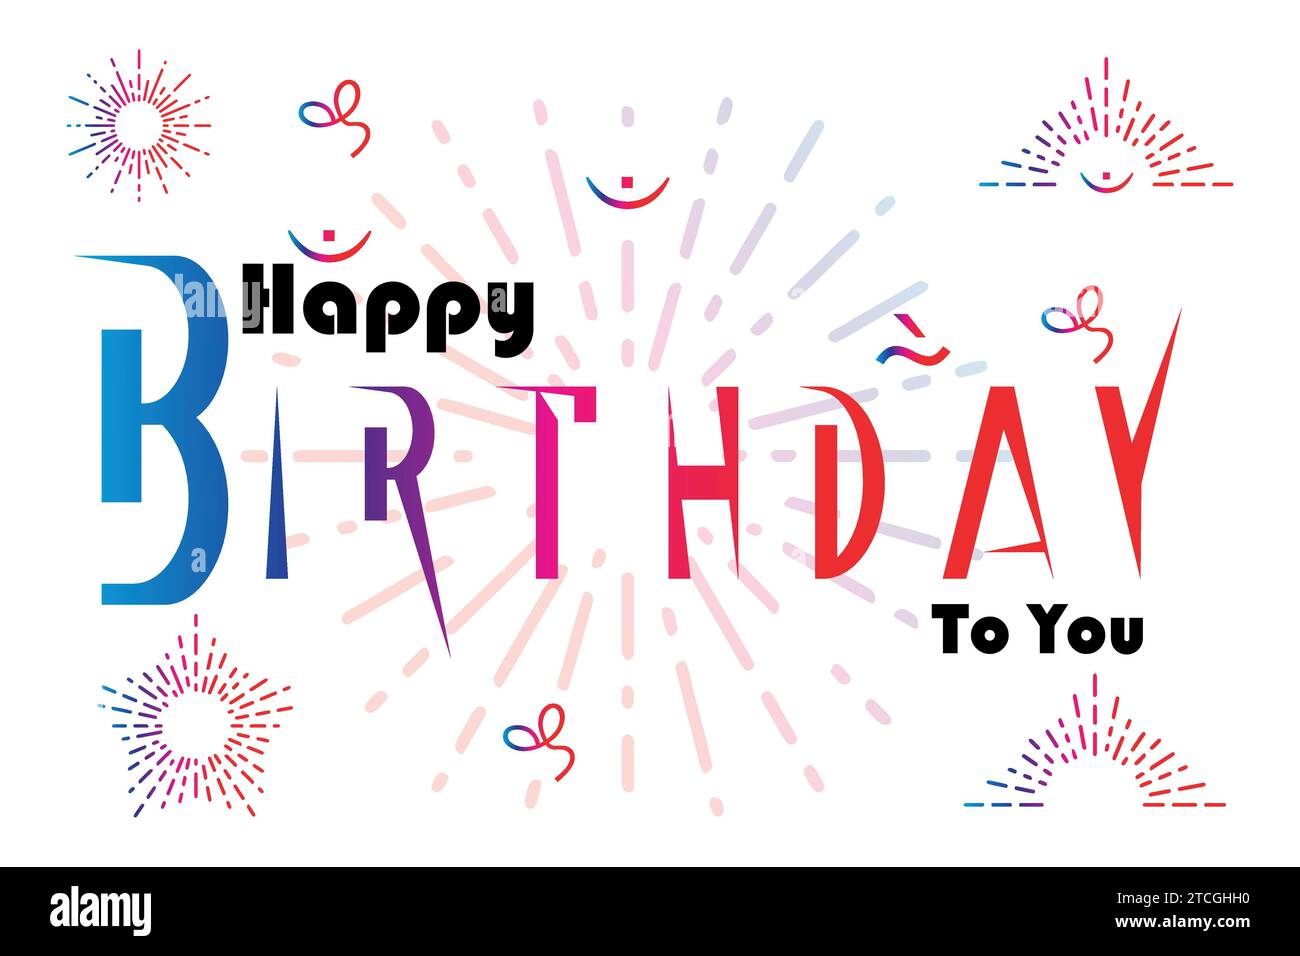 Happy Birthday wishings vector illustration. Stock Vector